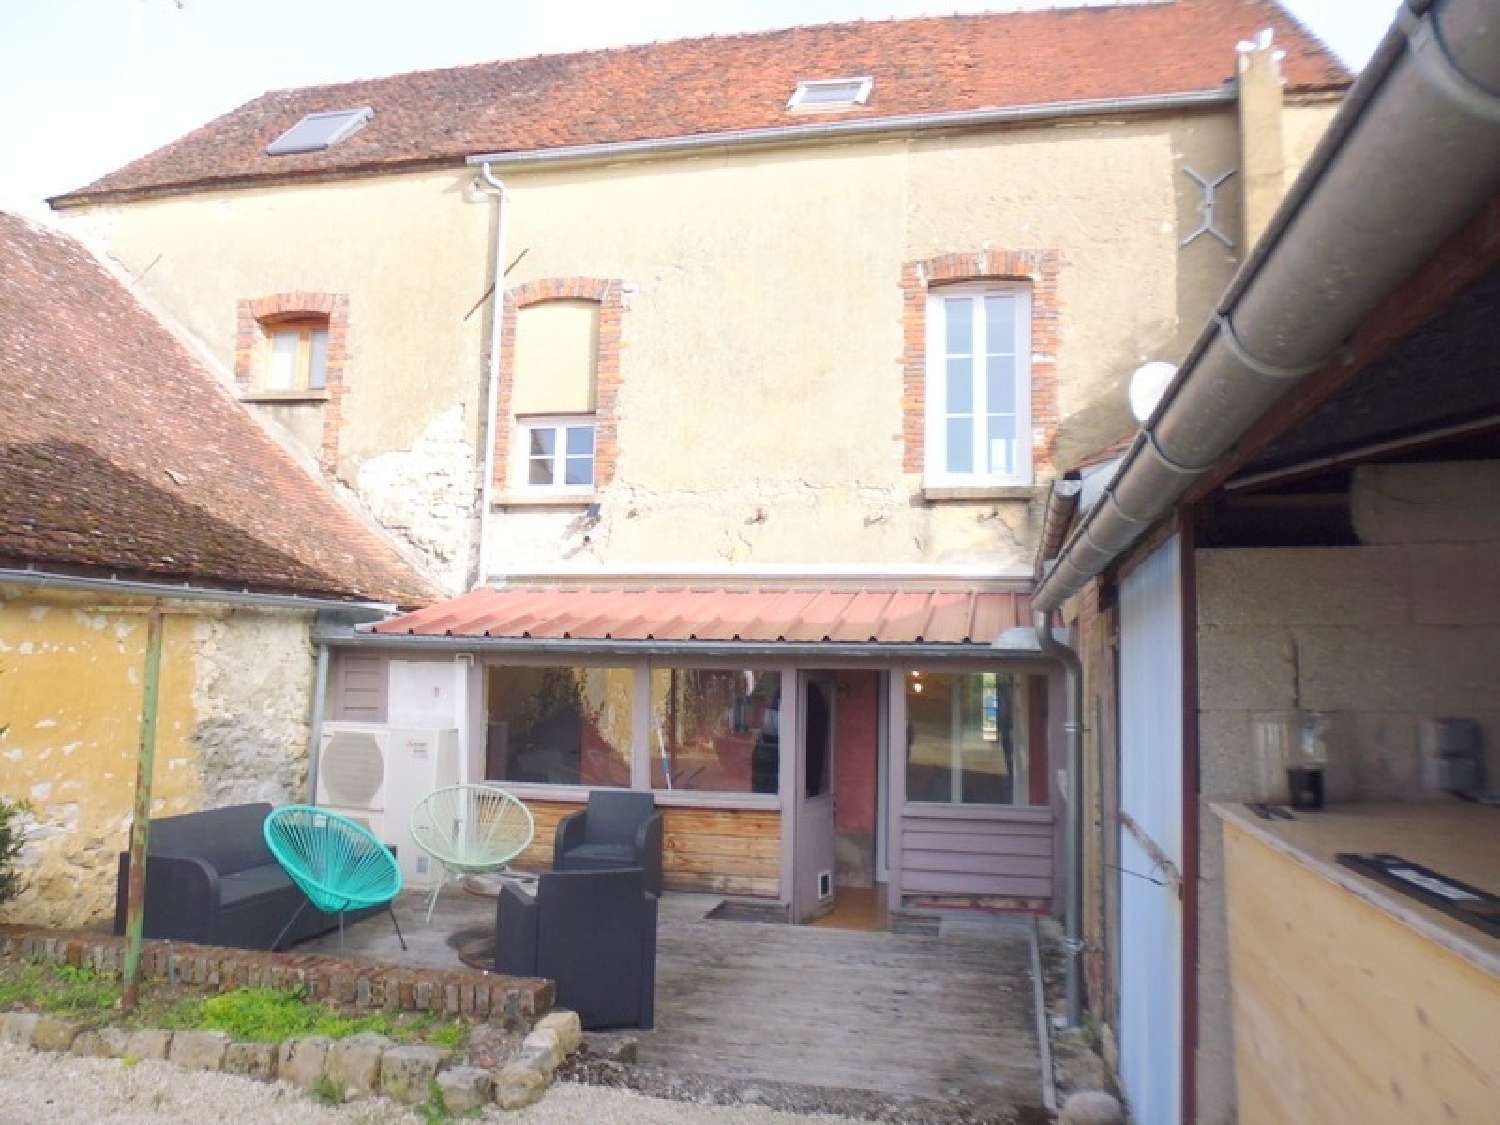  for sale village house Avrolles Yonne 4